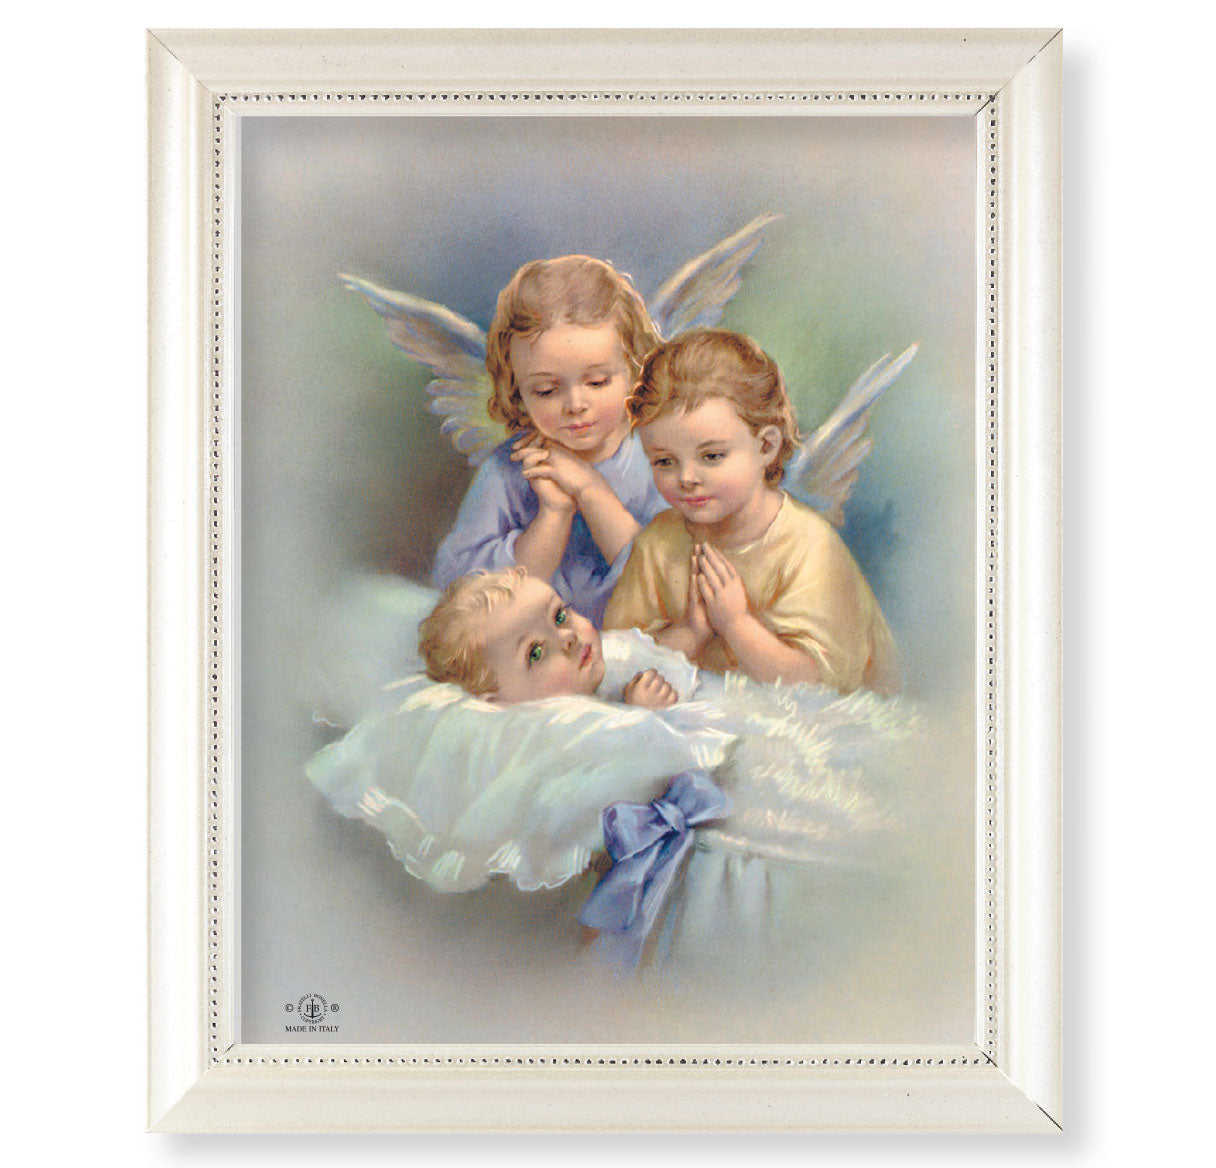 paintings of guardian angels